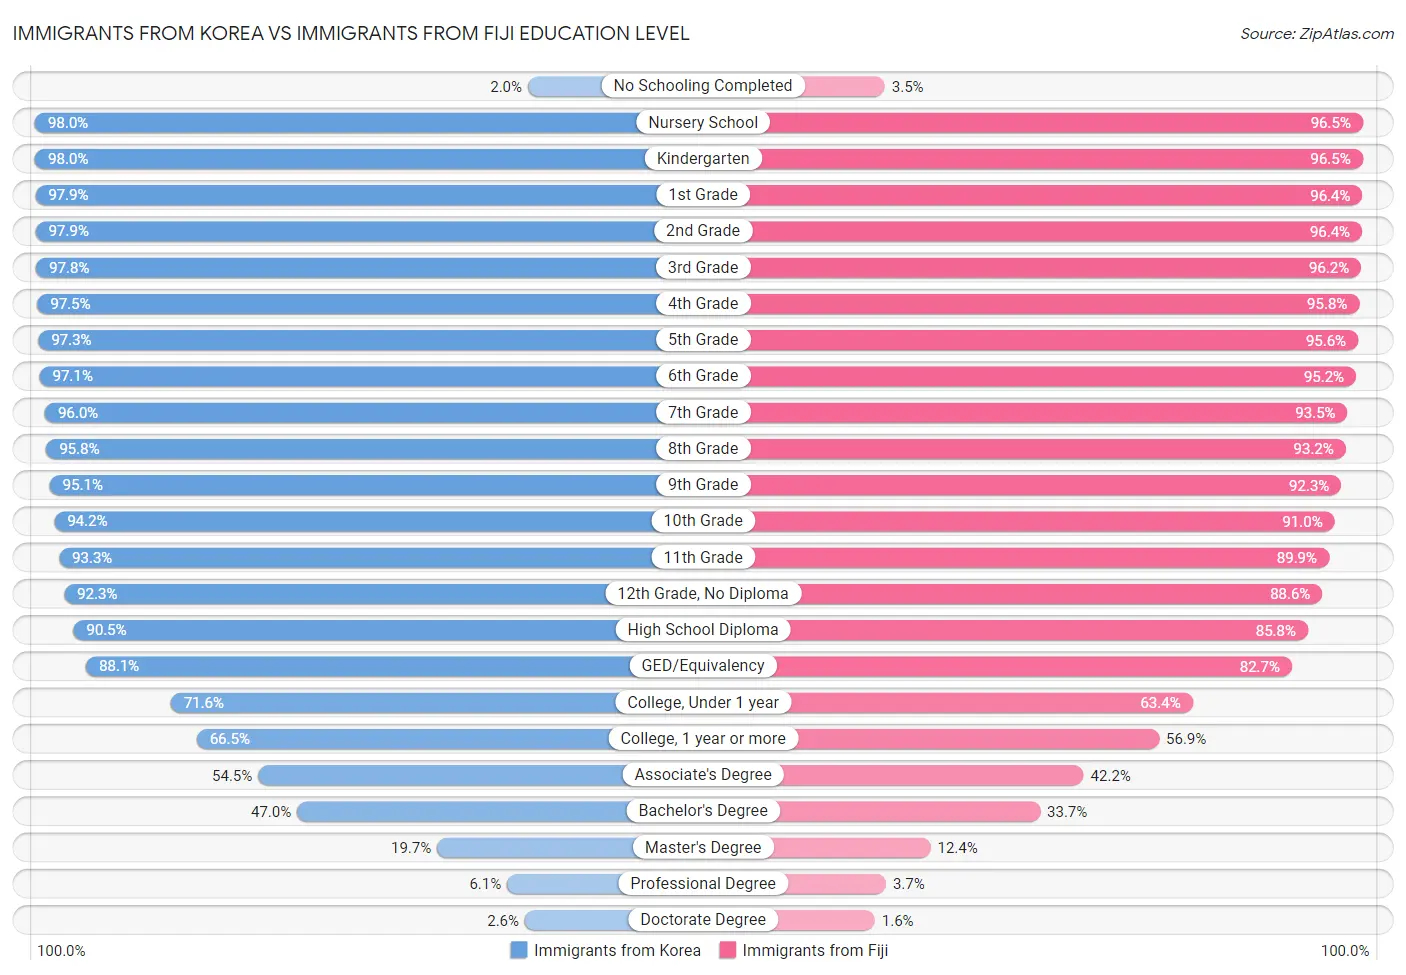 Immigrants from Korea vs Immigrants from Fiji Education Level